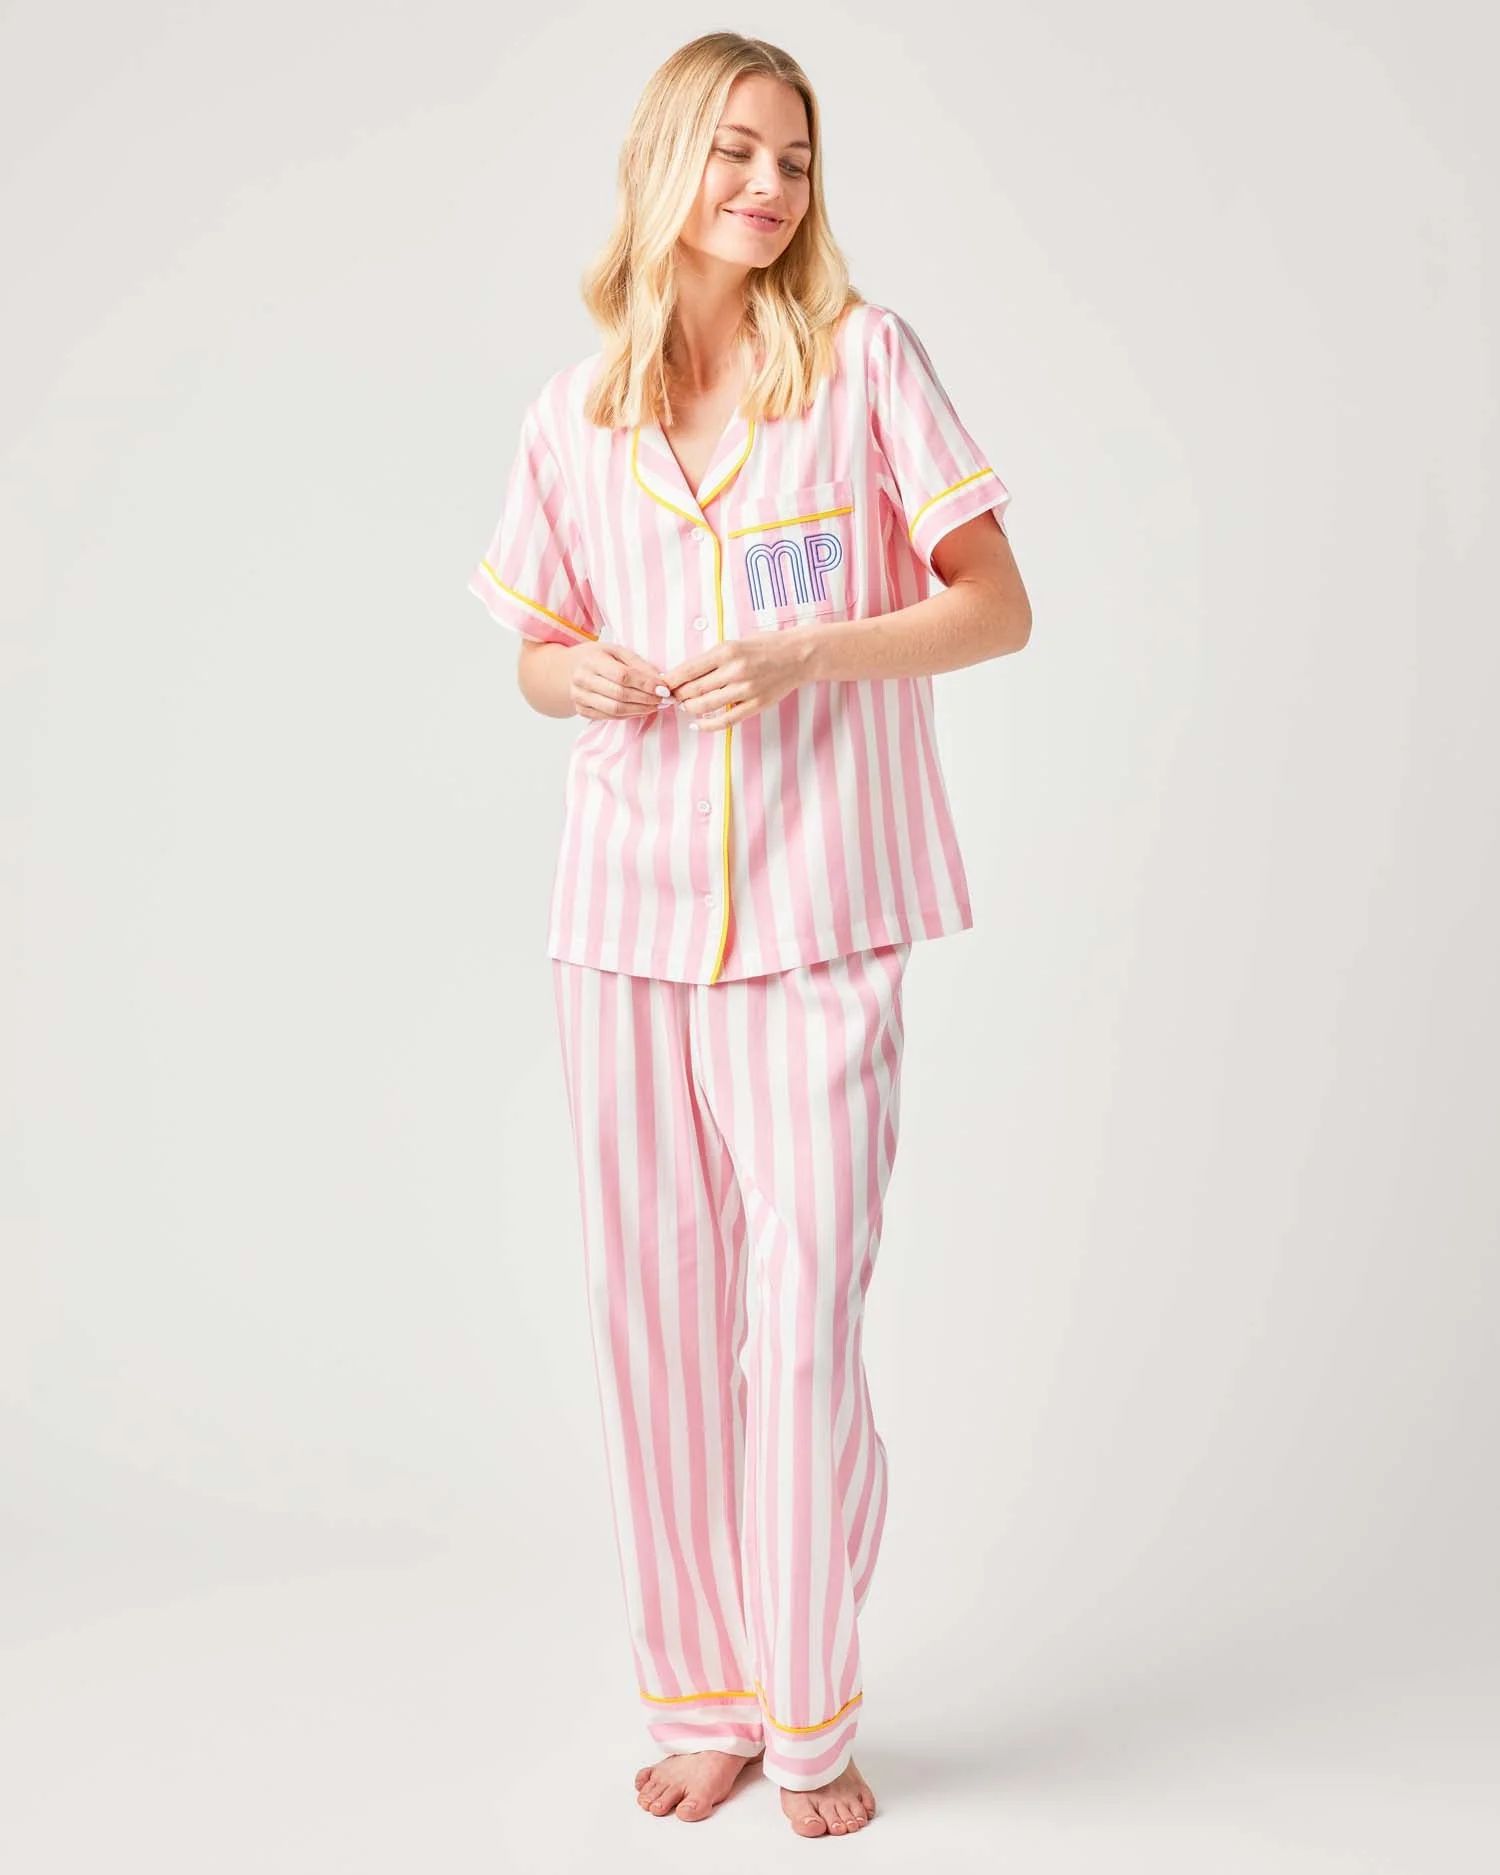 Retro Striped Pajama Pants Set | Colorful Prints, Wallpaper, Pajamas, Home Decor, & More | Katie Kime Inc